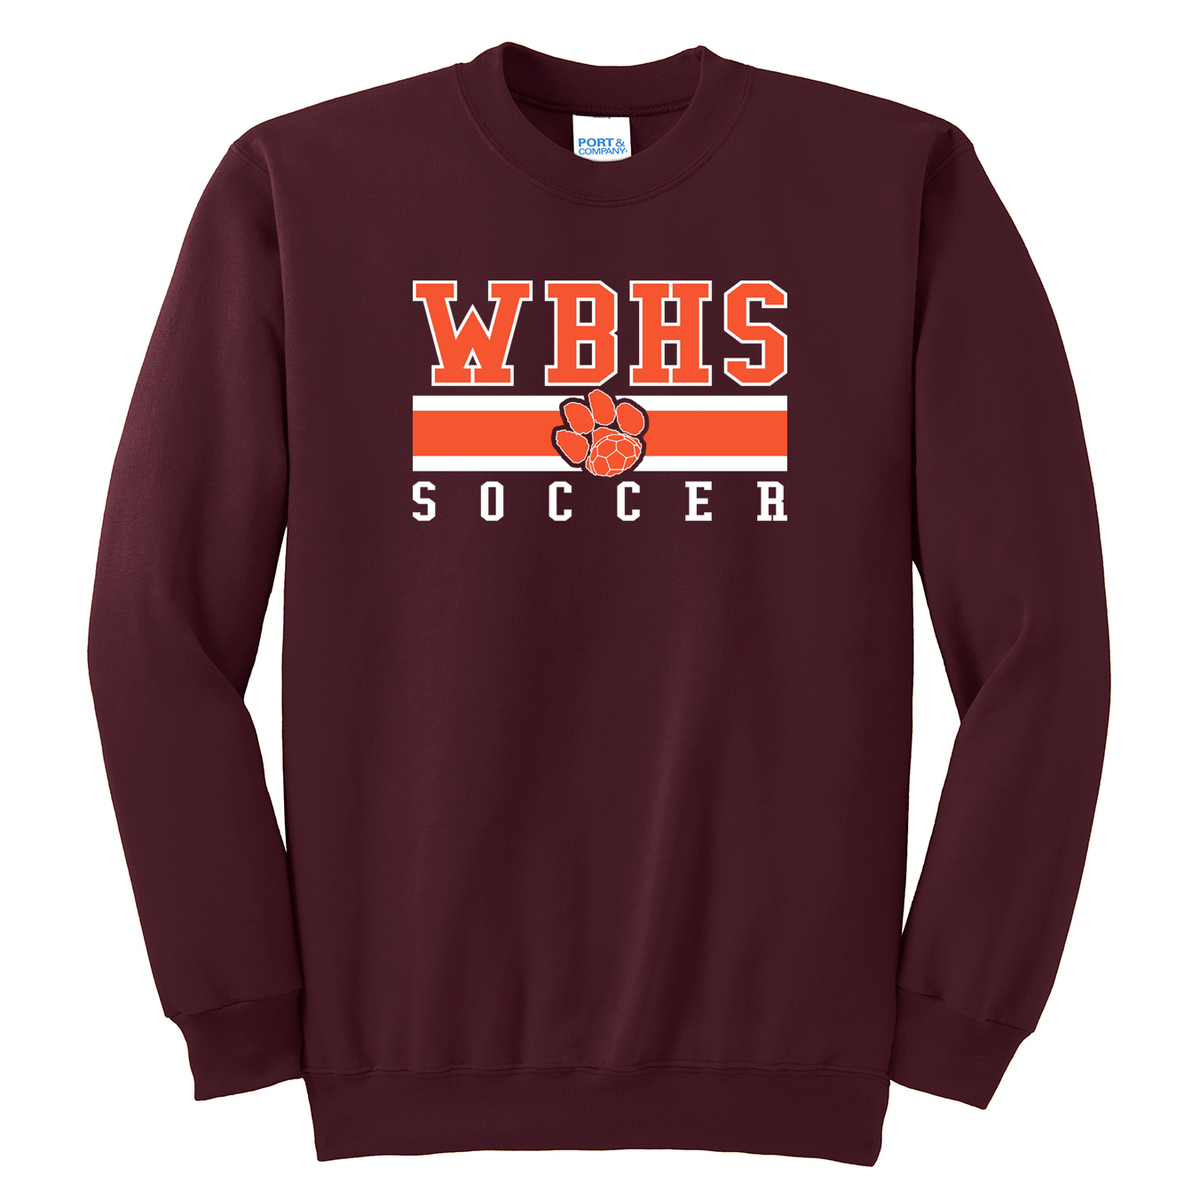 WBHS Boys Soccer Crew Neck Sweater